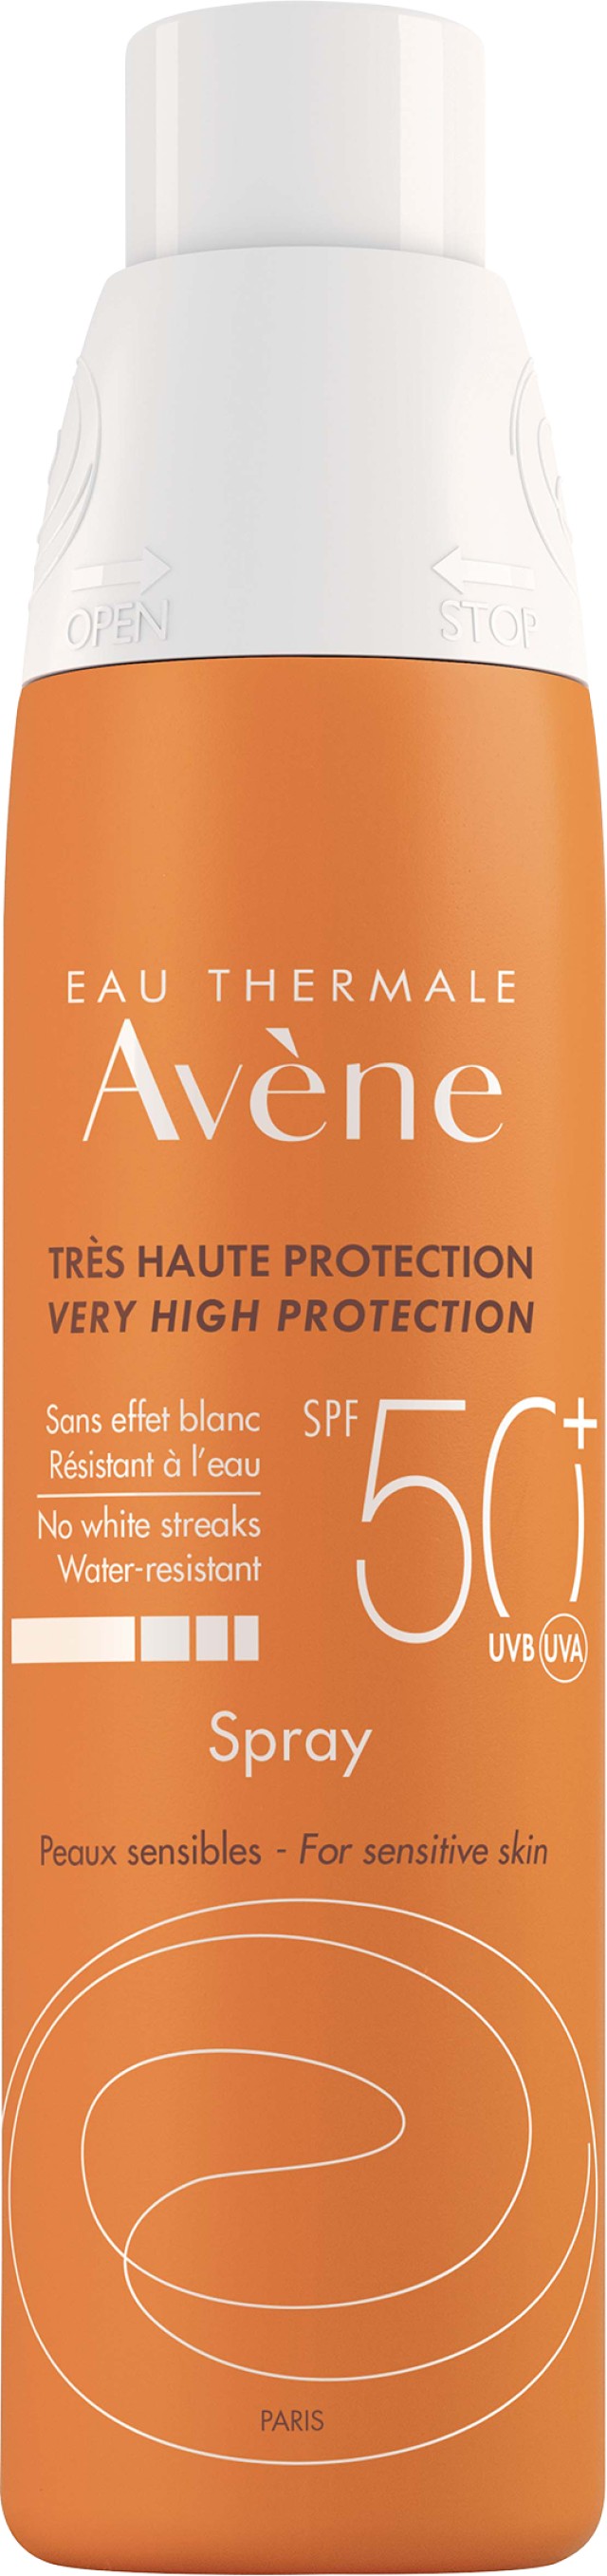 Avène - Αντηλιακό Σπρέι SPF 50+ - Πολύ Υψηλή Προστασία & Ενυδάτωση - Πρόσωπο & Σώμα 200ml